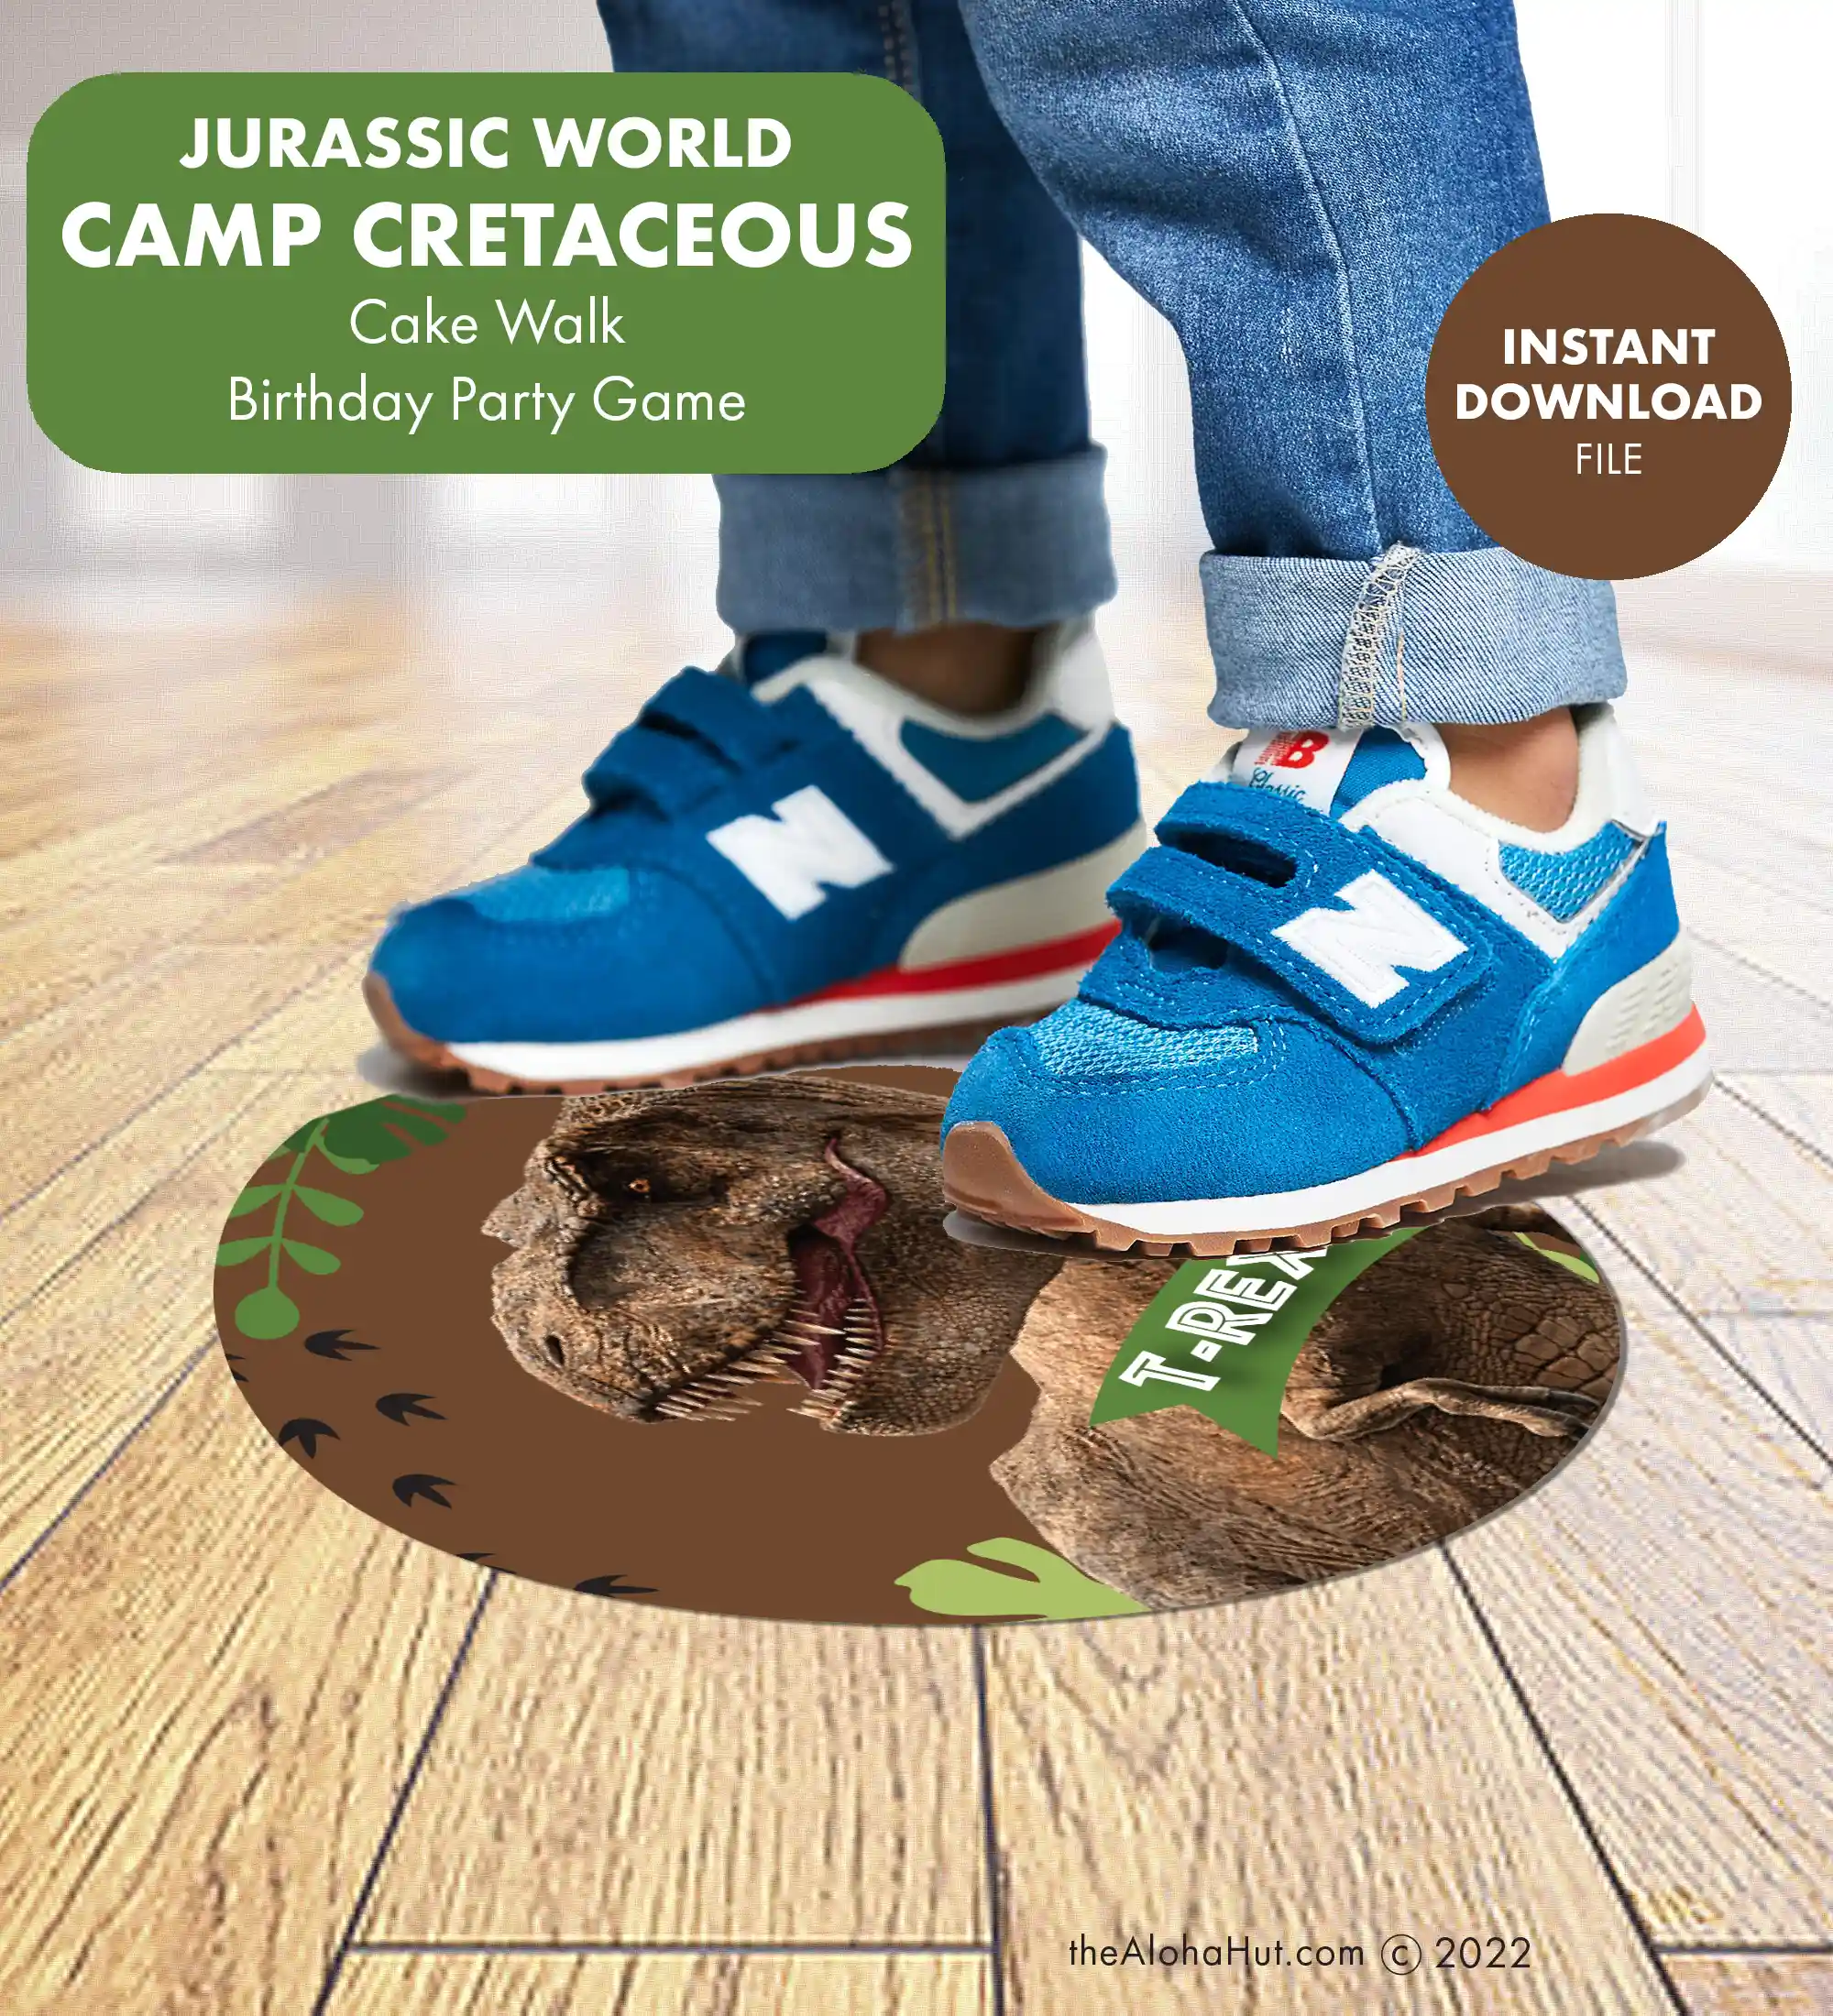 Jurassic World Camp Cretaceous Party Ideas - Dinosaur Party Ideas - free printable party decor & games - cake walk